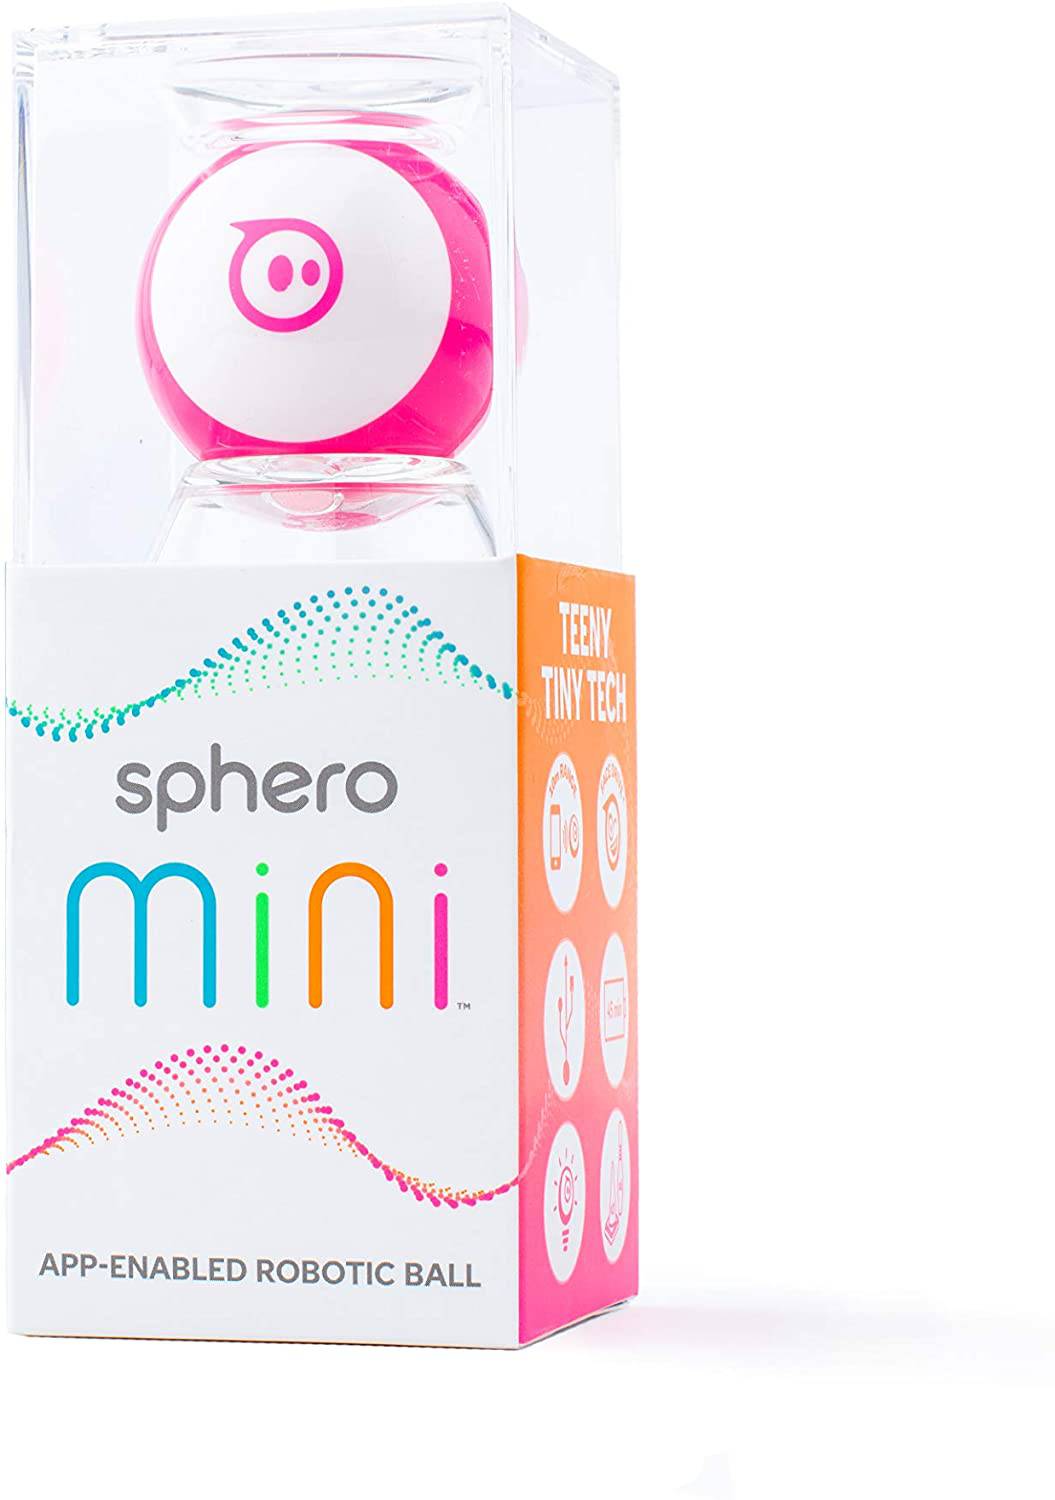 Sphero Mini The App Controlled